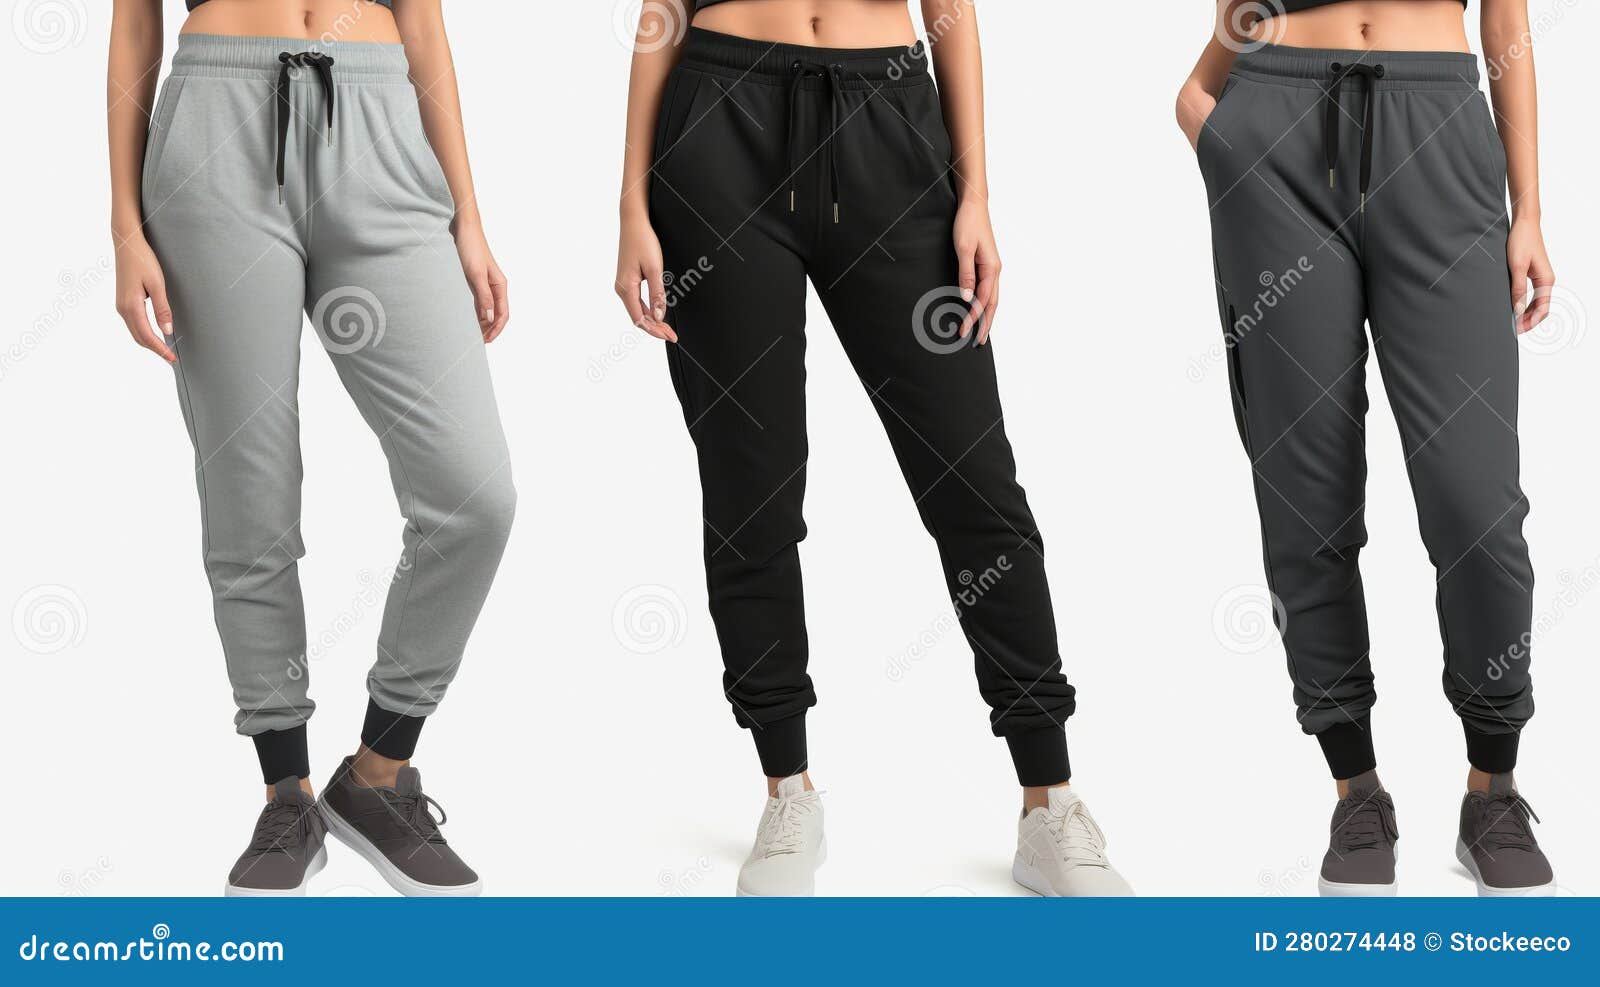 Women S Jogging Pants in Dark Gray and Light Black - 32k Uhd, Fawncore ...